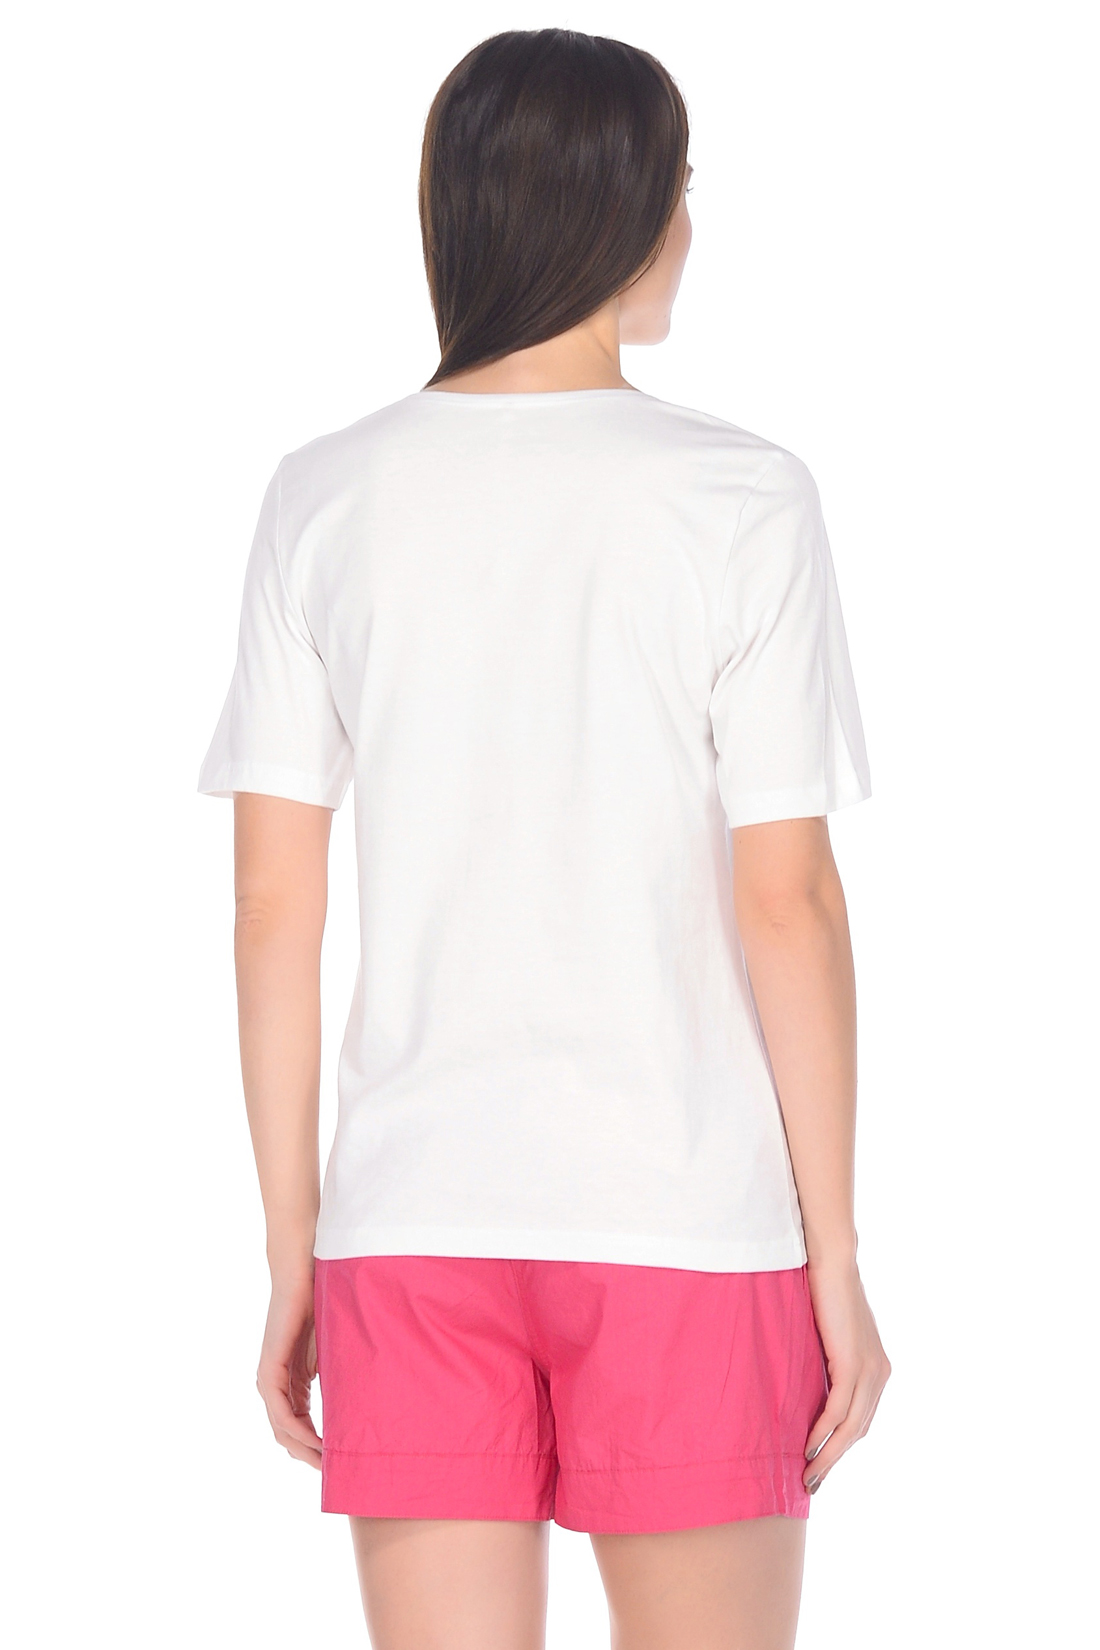 Белая футболка с рисунком (арт. baon B238070), размер XXL, цвет белый Белая футболка с рисунком (арт. baon B238070) - фото 2